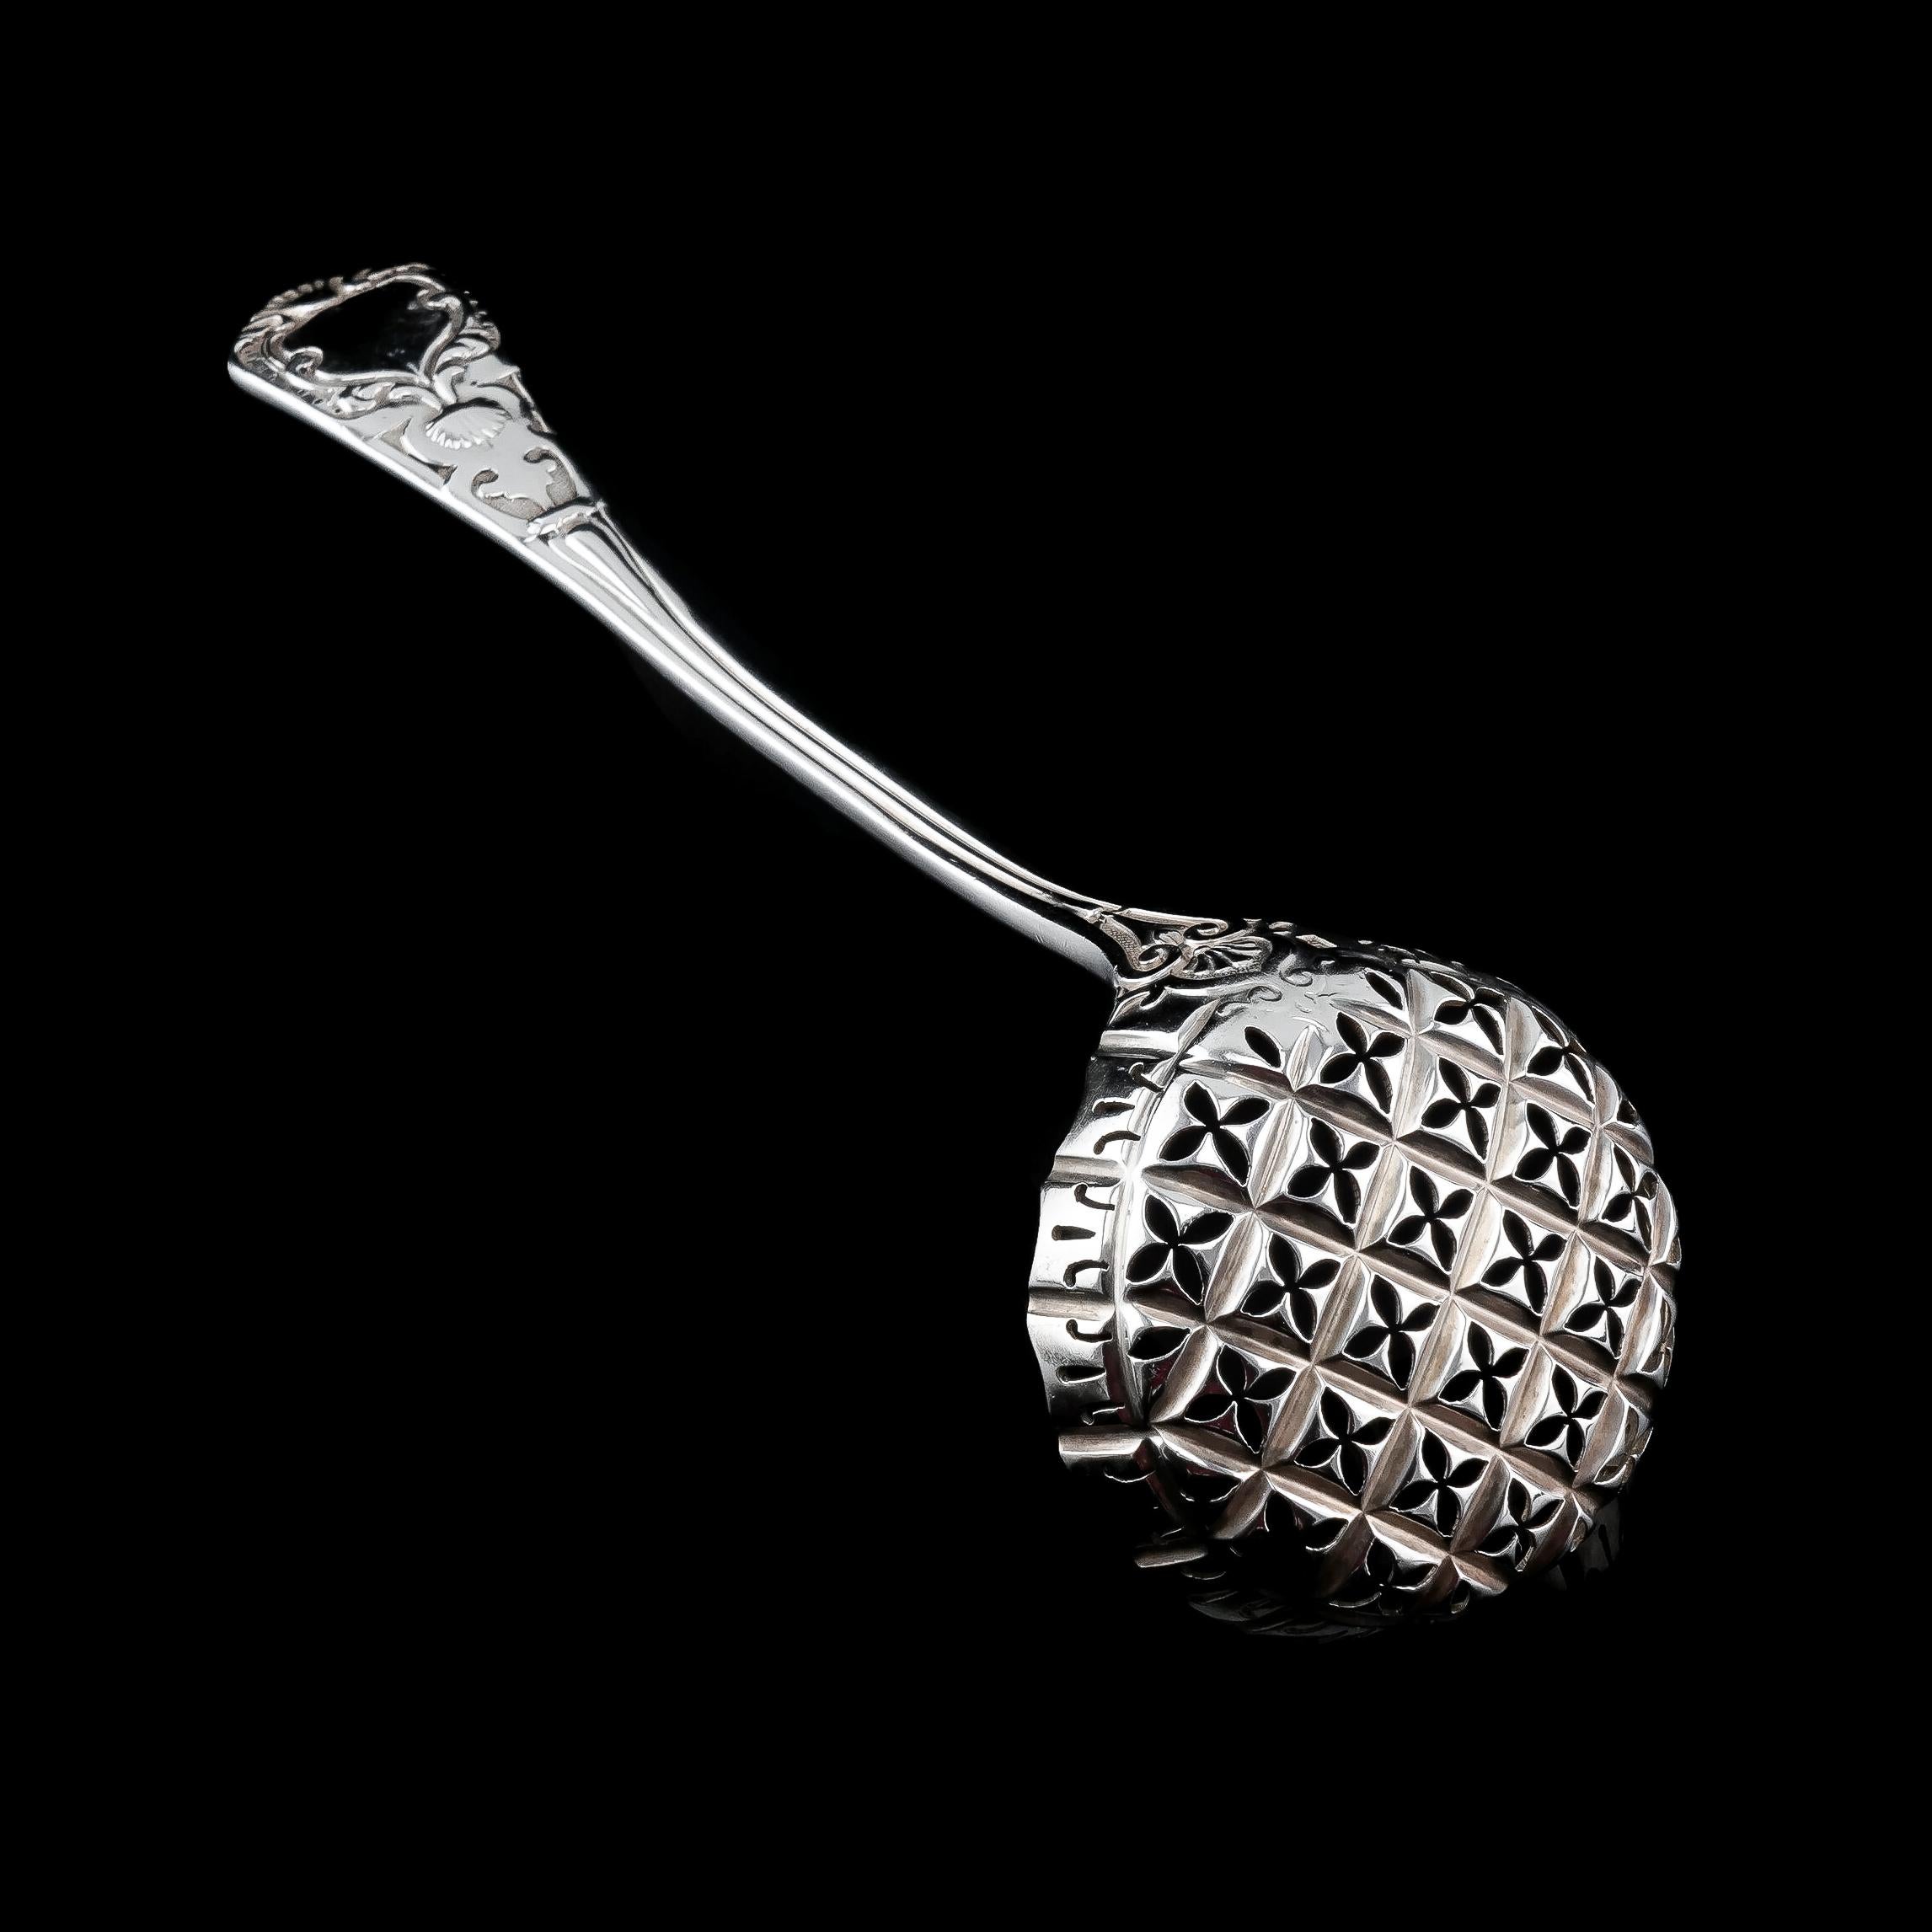 English Antique Solid Silver Sugar Sifter Spoon, Francis Higgins, 1856